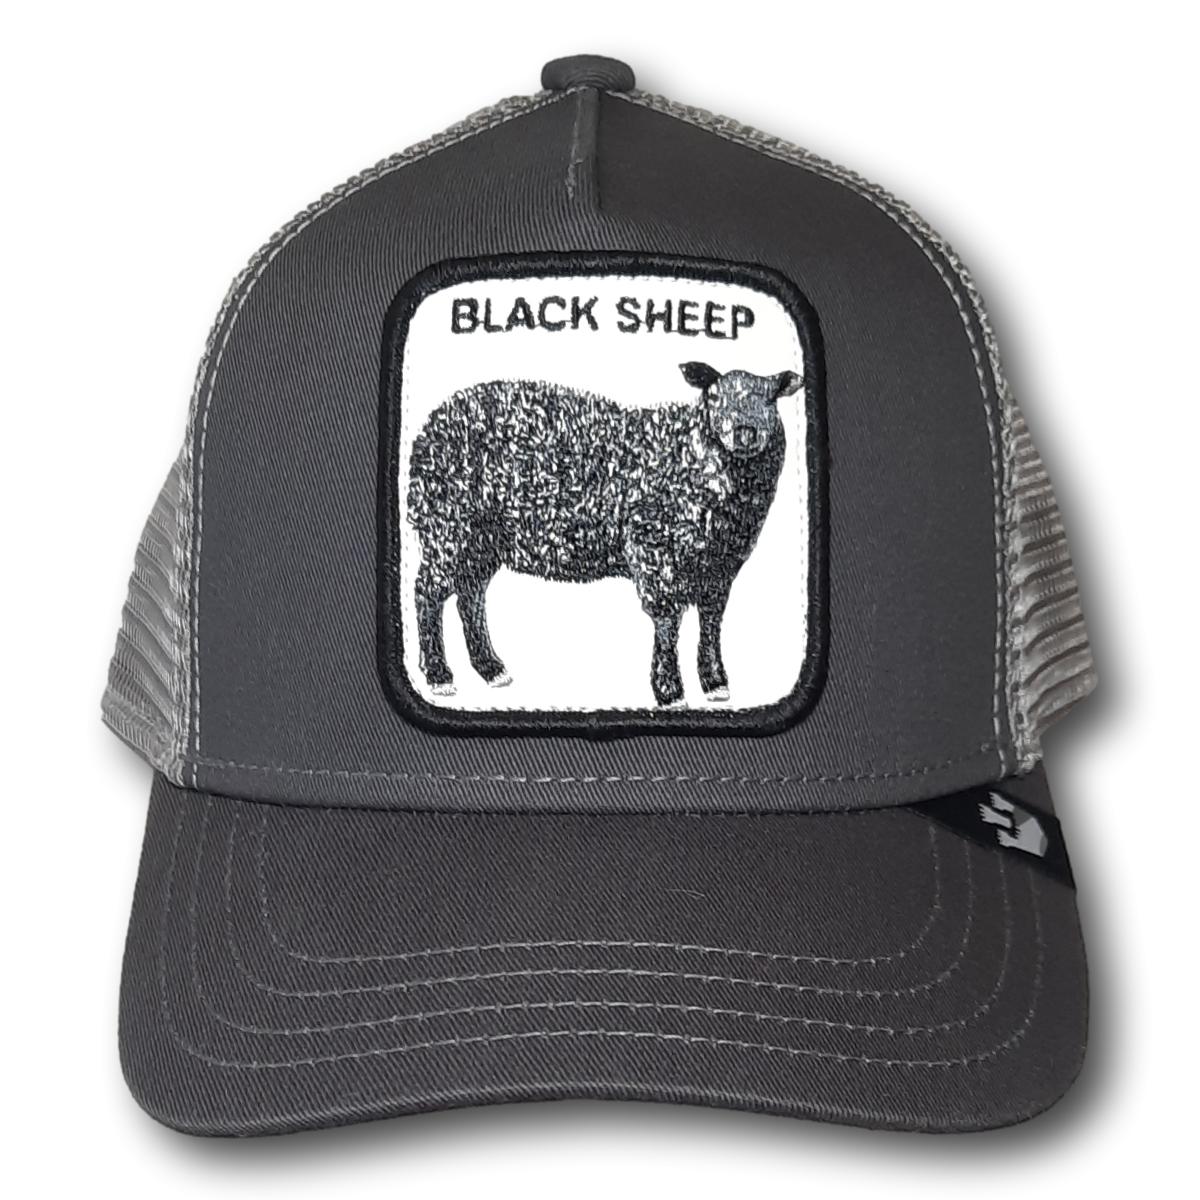 The Black Sheep Cap